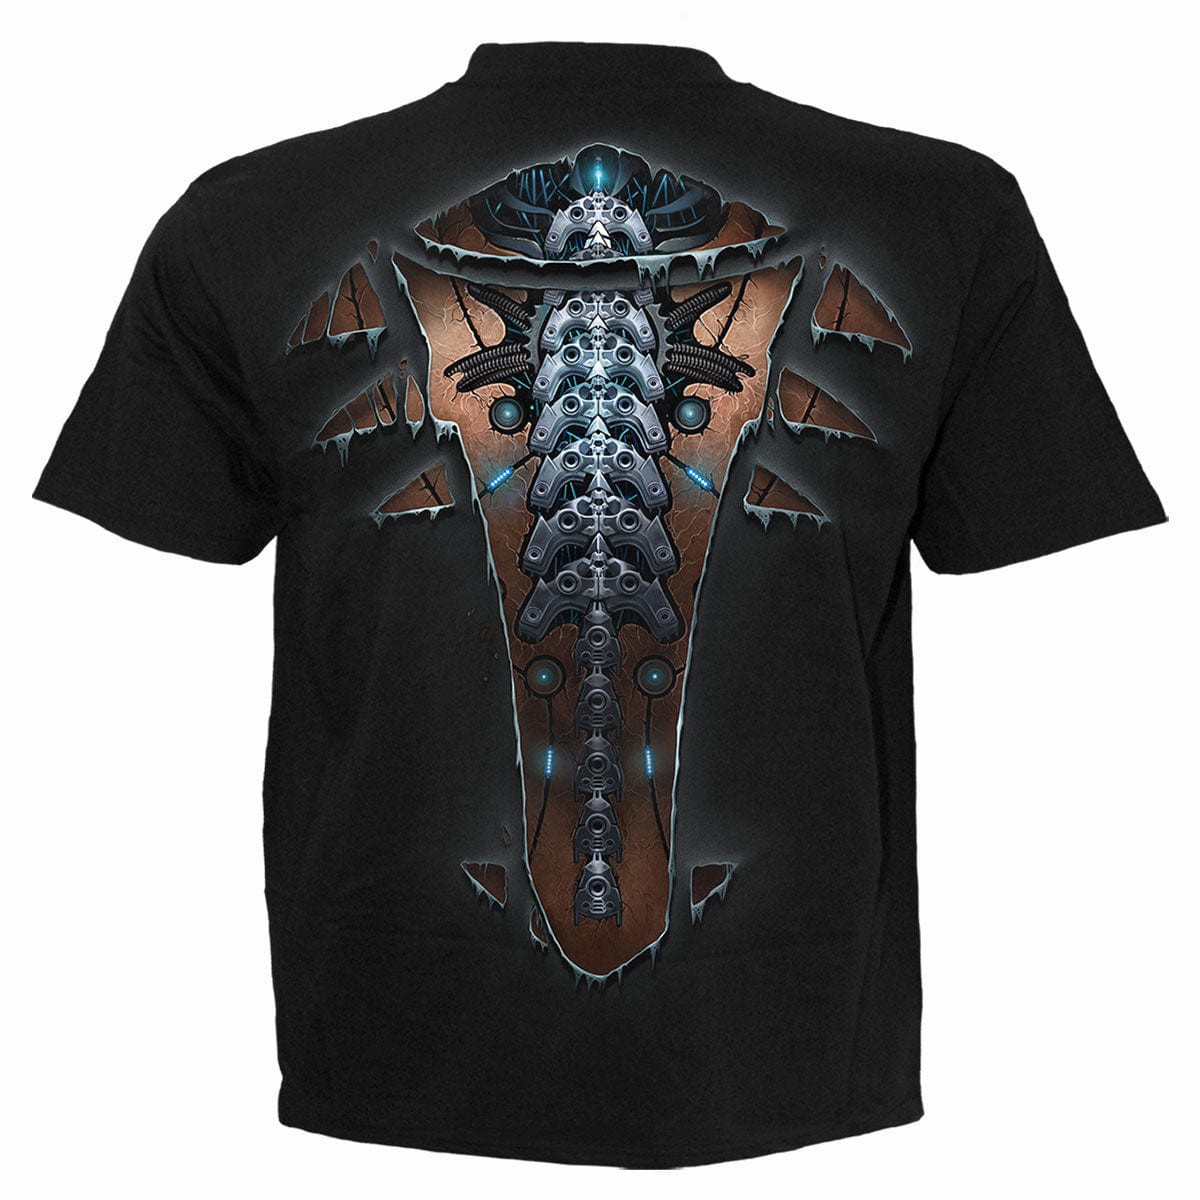 CYBER SKIN - T-Shirt Black - Spiral USA